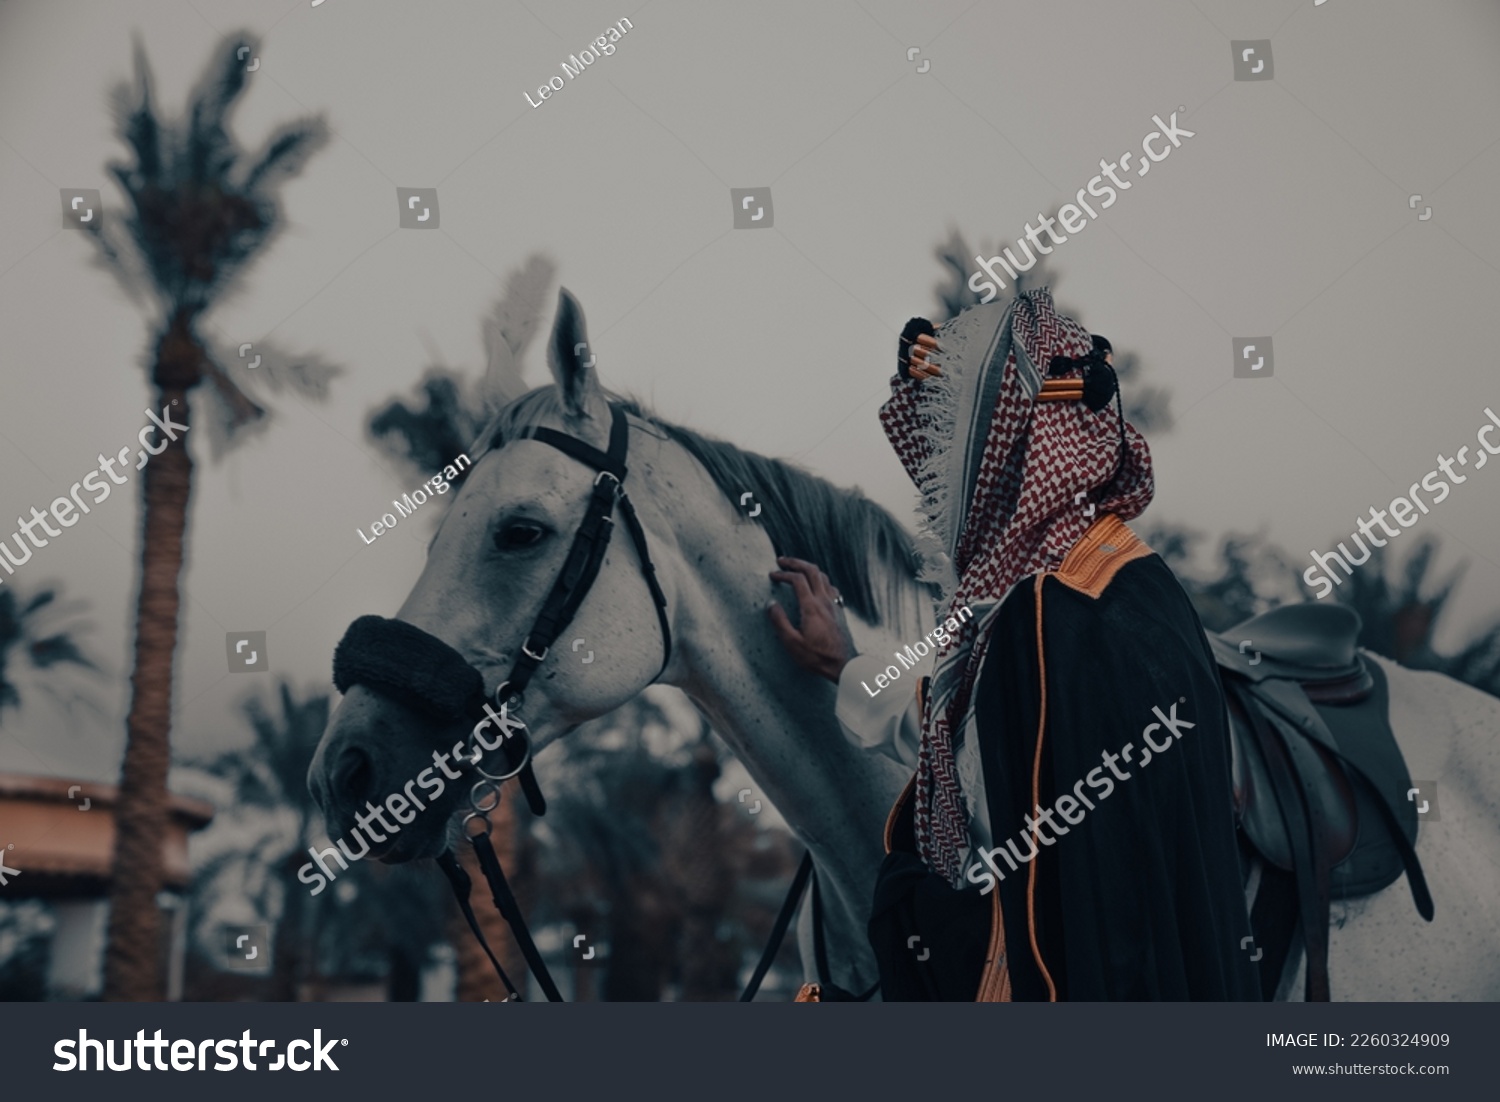 Saudi Foundation Day, the national day of the Kingdom of KSA, A Saudi man riding a horse and carrying a Saudi warrior's sword
Saudi heritage History of the Kingdom of KSA #2260324909